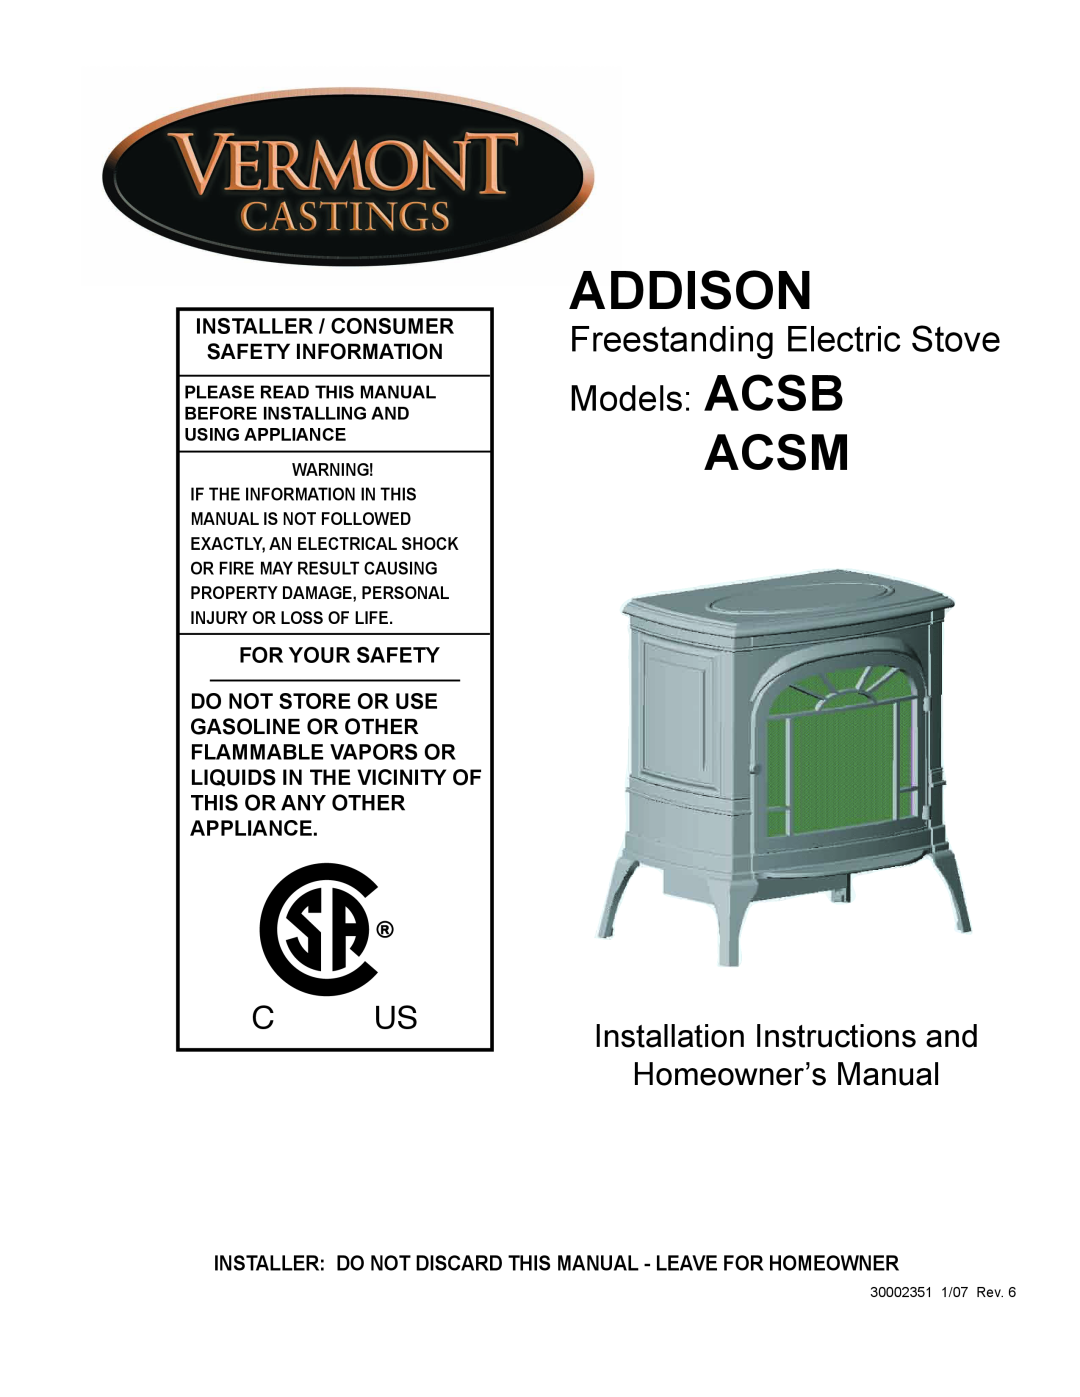 Vermont Casting ACSB ACSM installation instructions Addison, Acsm, Freestanding Electric Stove Models ACSB, C Us 